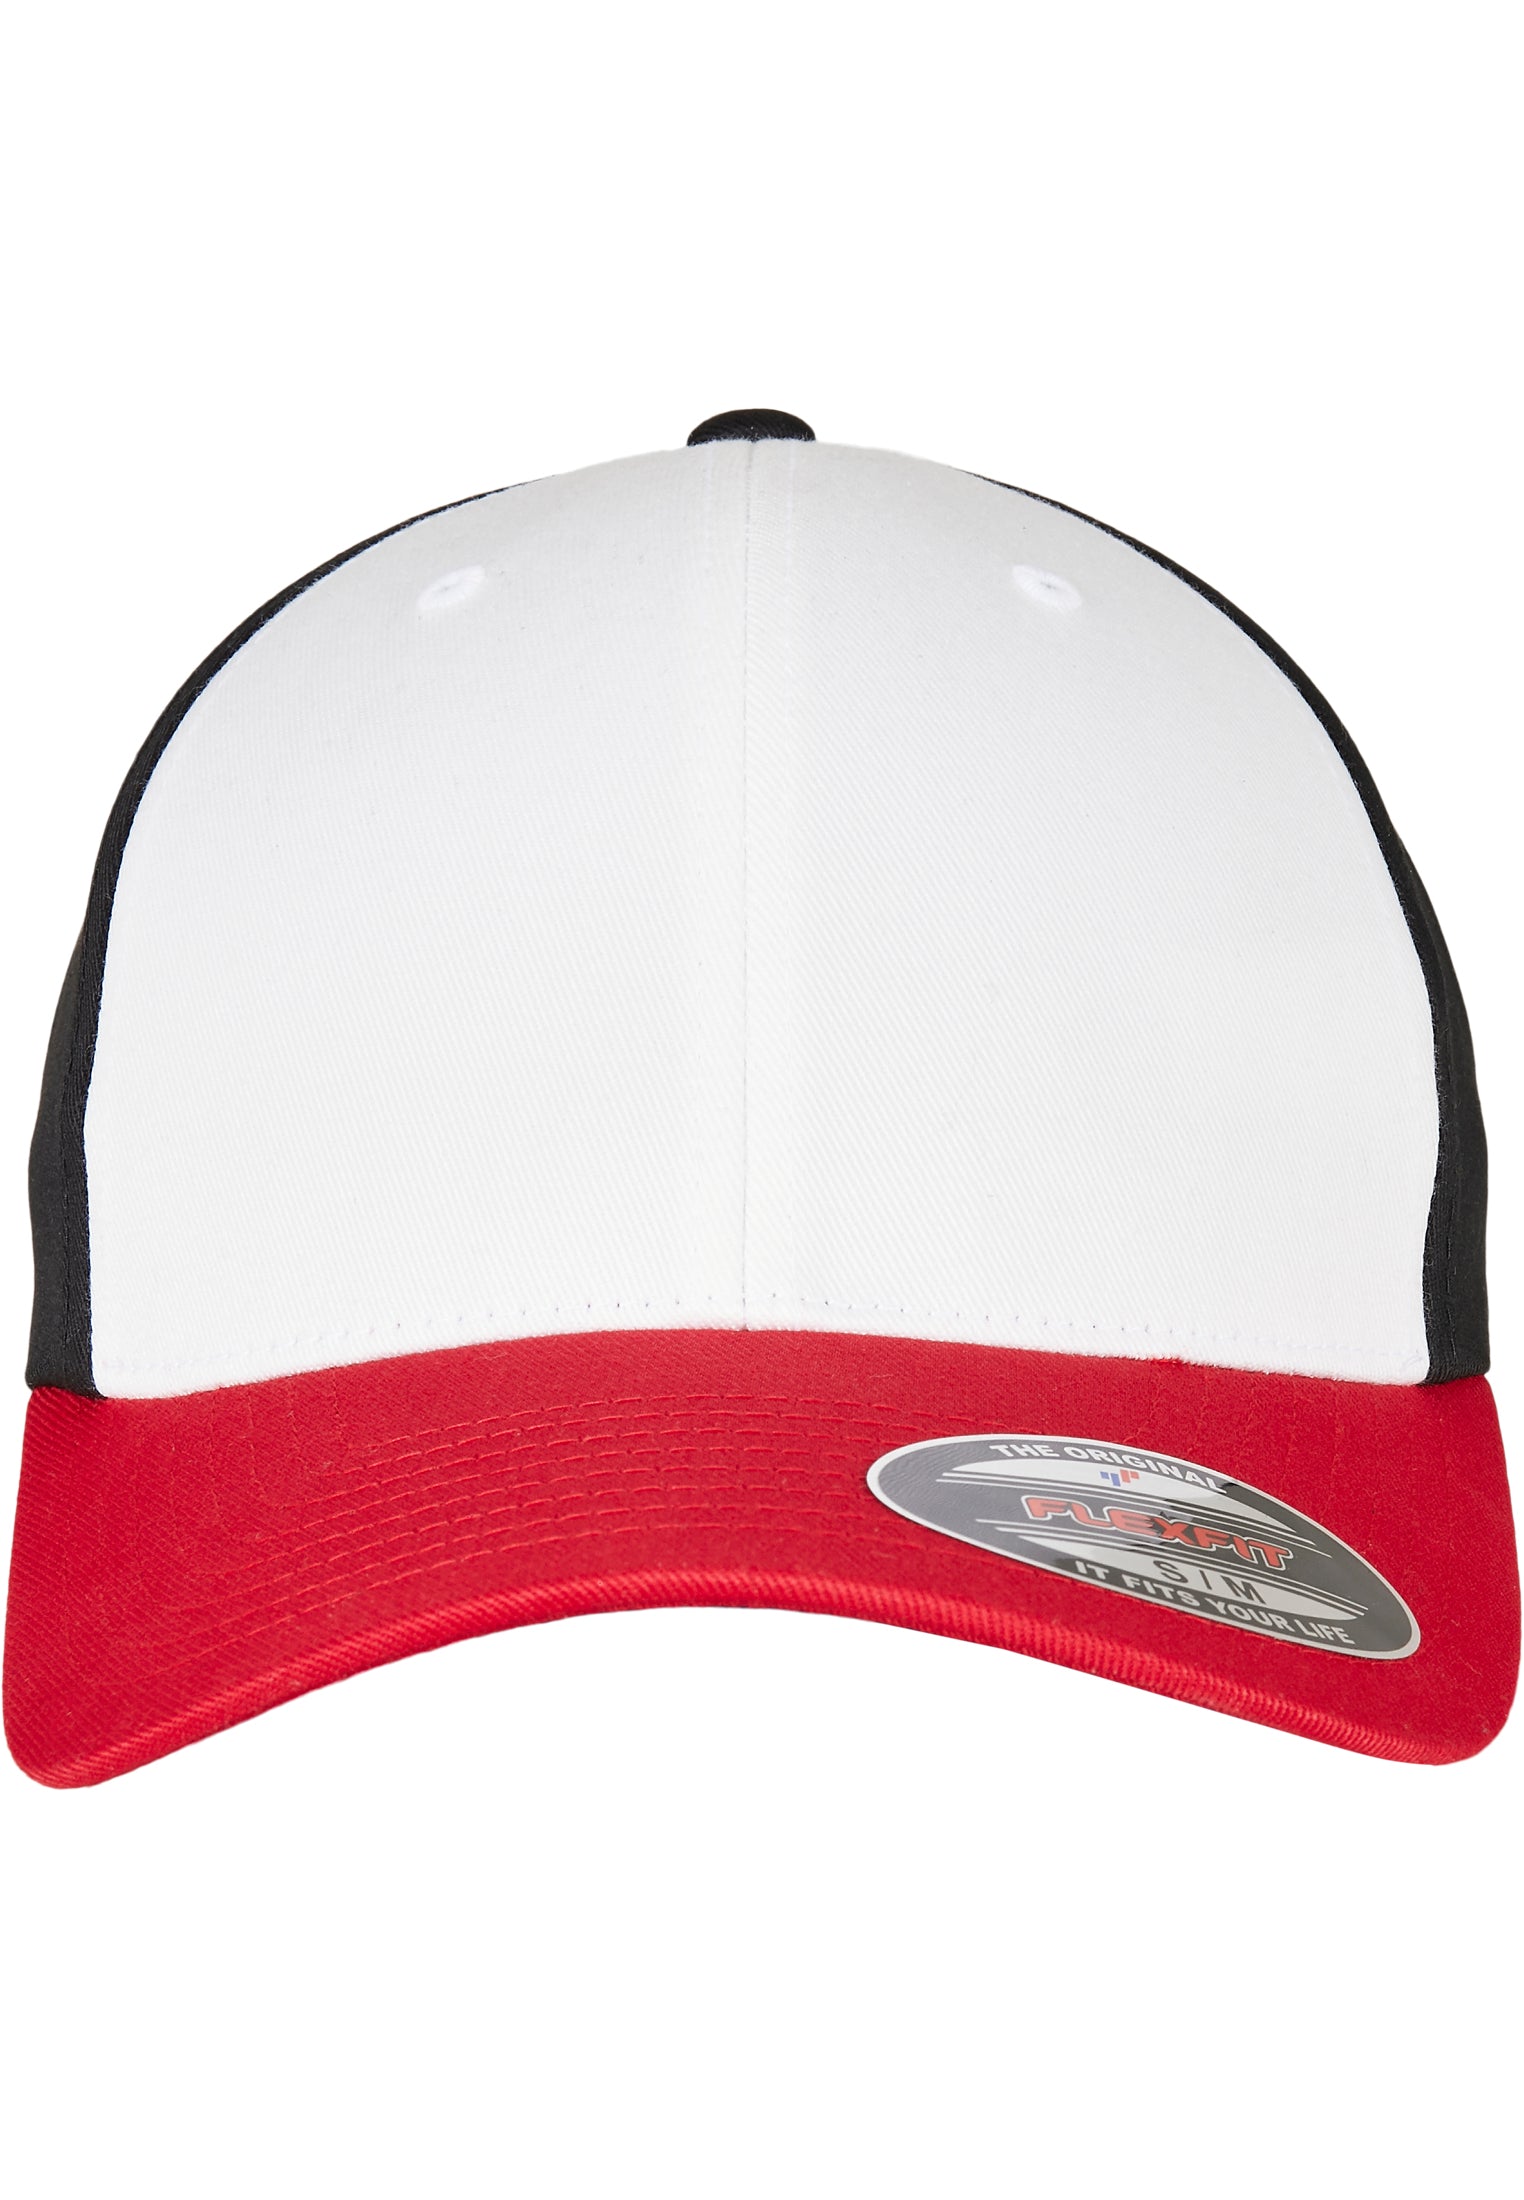 3 COMBED TONE Flexfit WOOLY Caps CAP 6277TT Red/White/Black